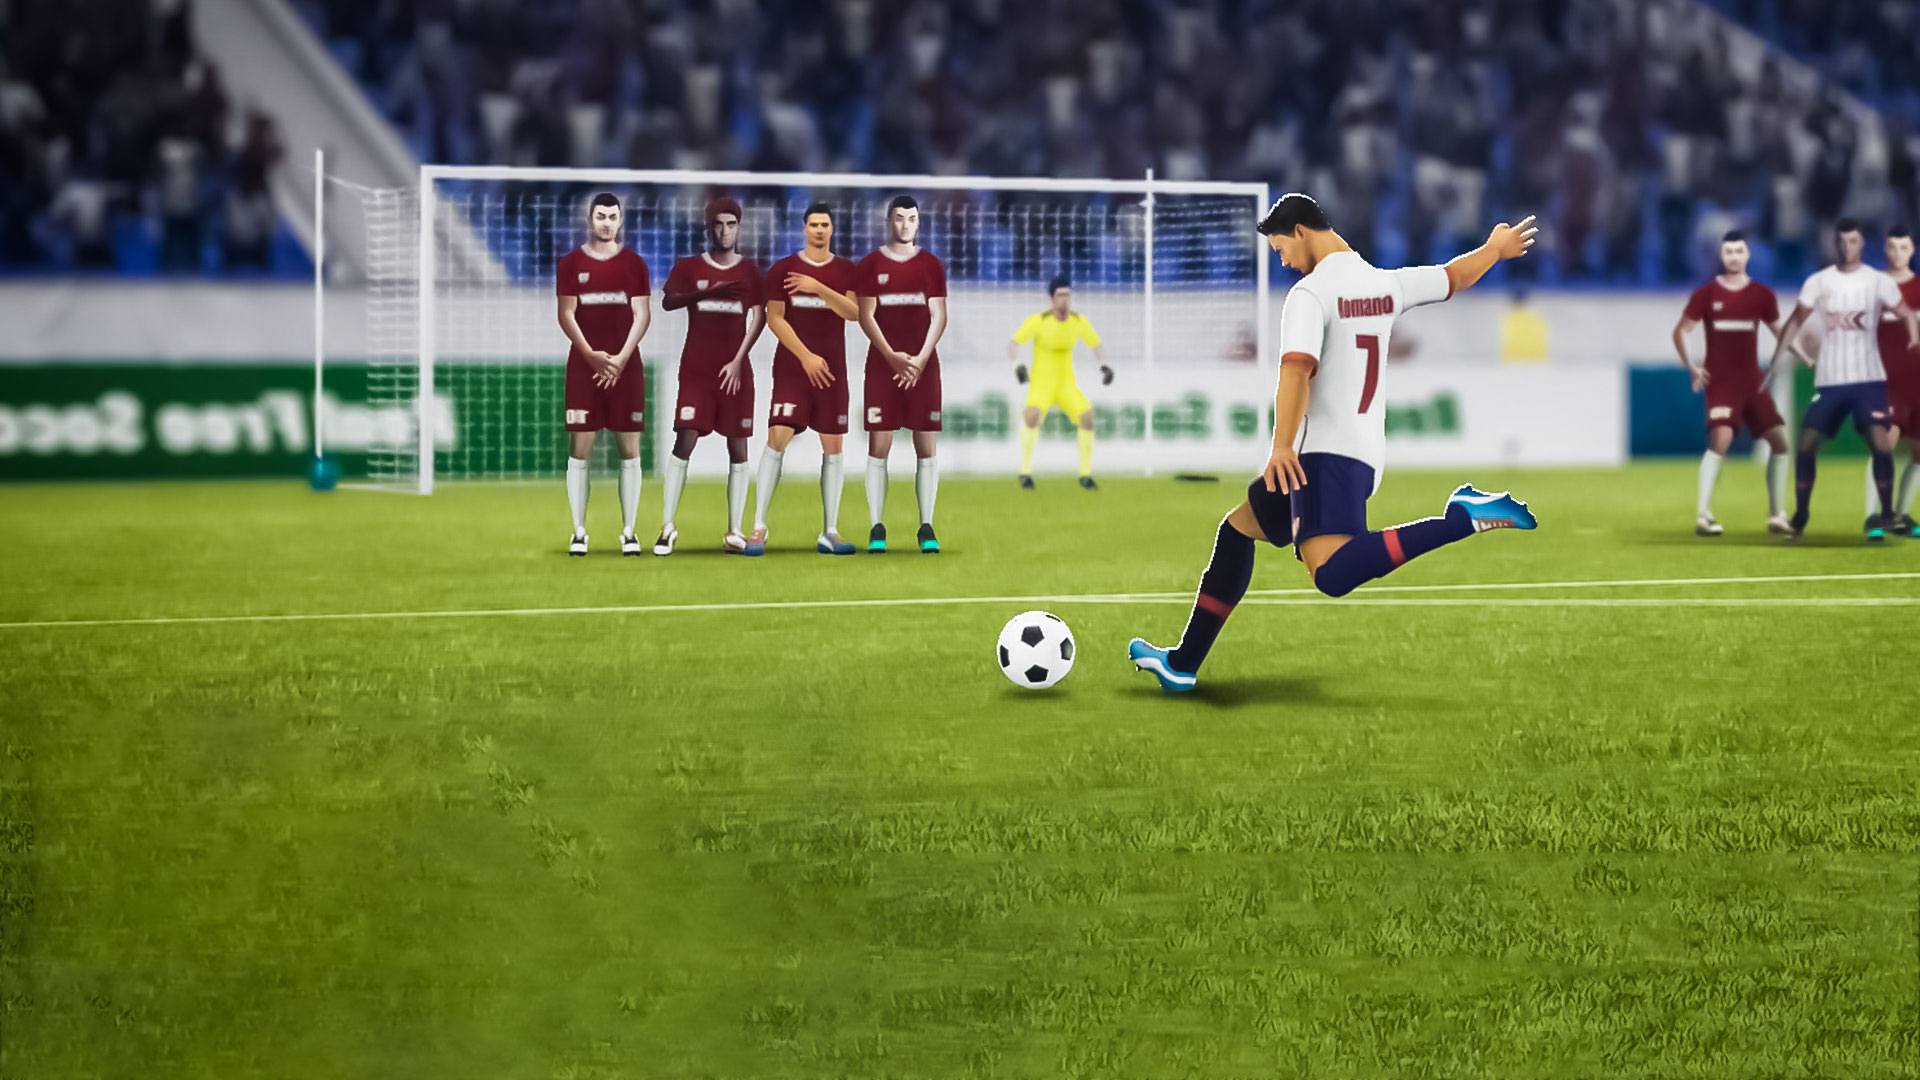 Soccer Super Star - Siêu Sao Bóng Đá